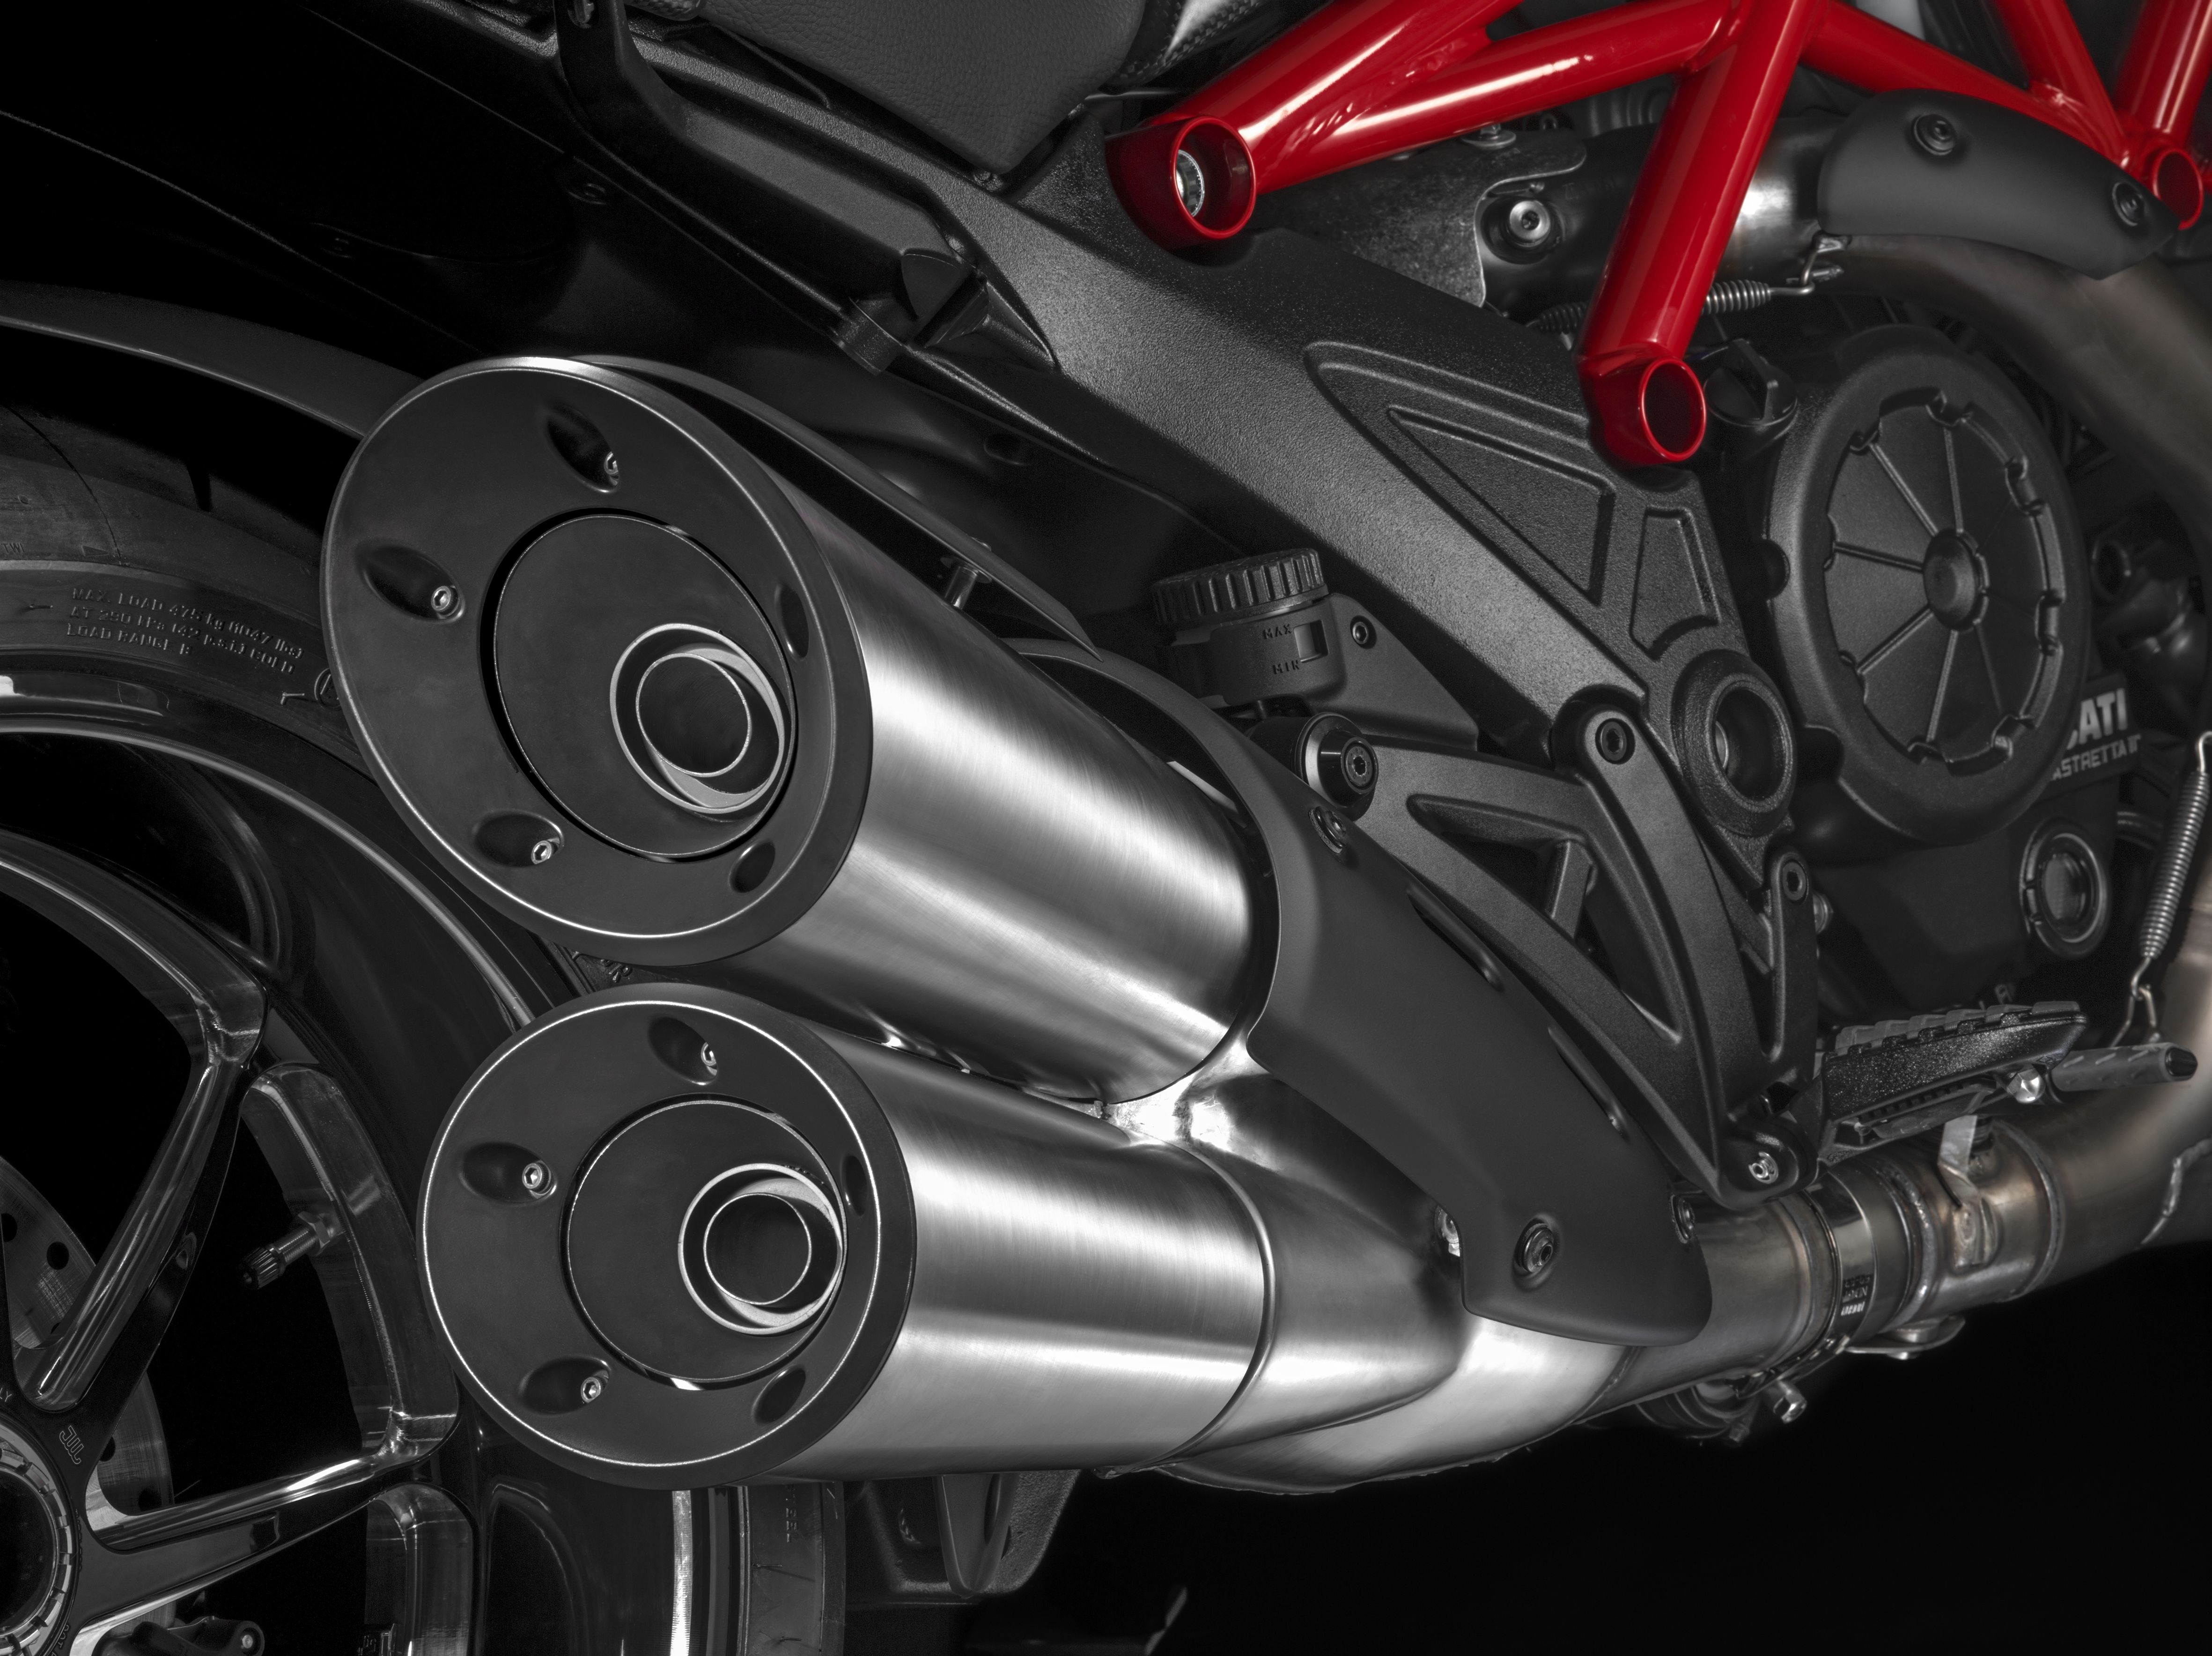 First UK ride: Ducati Diavel 2014 review